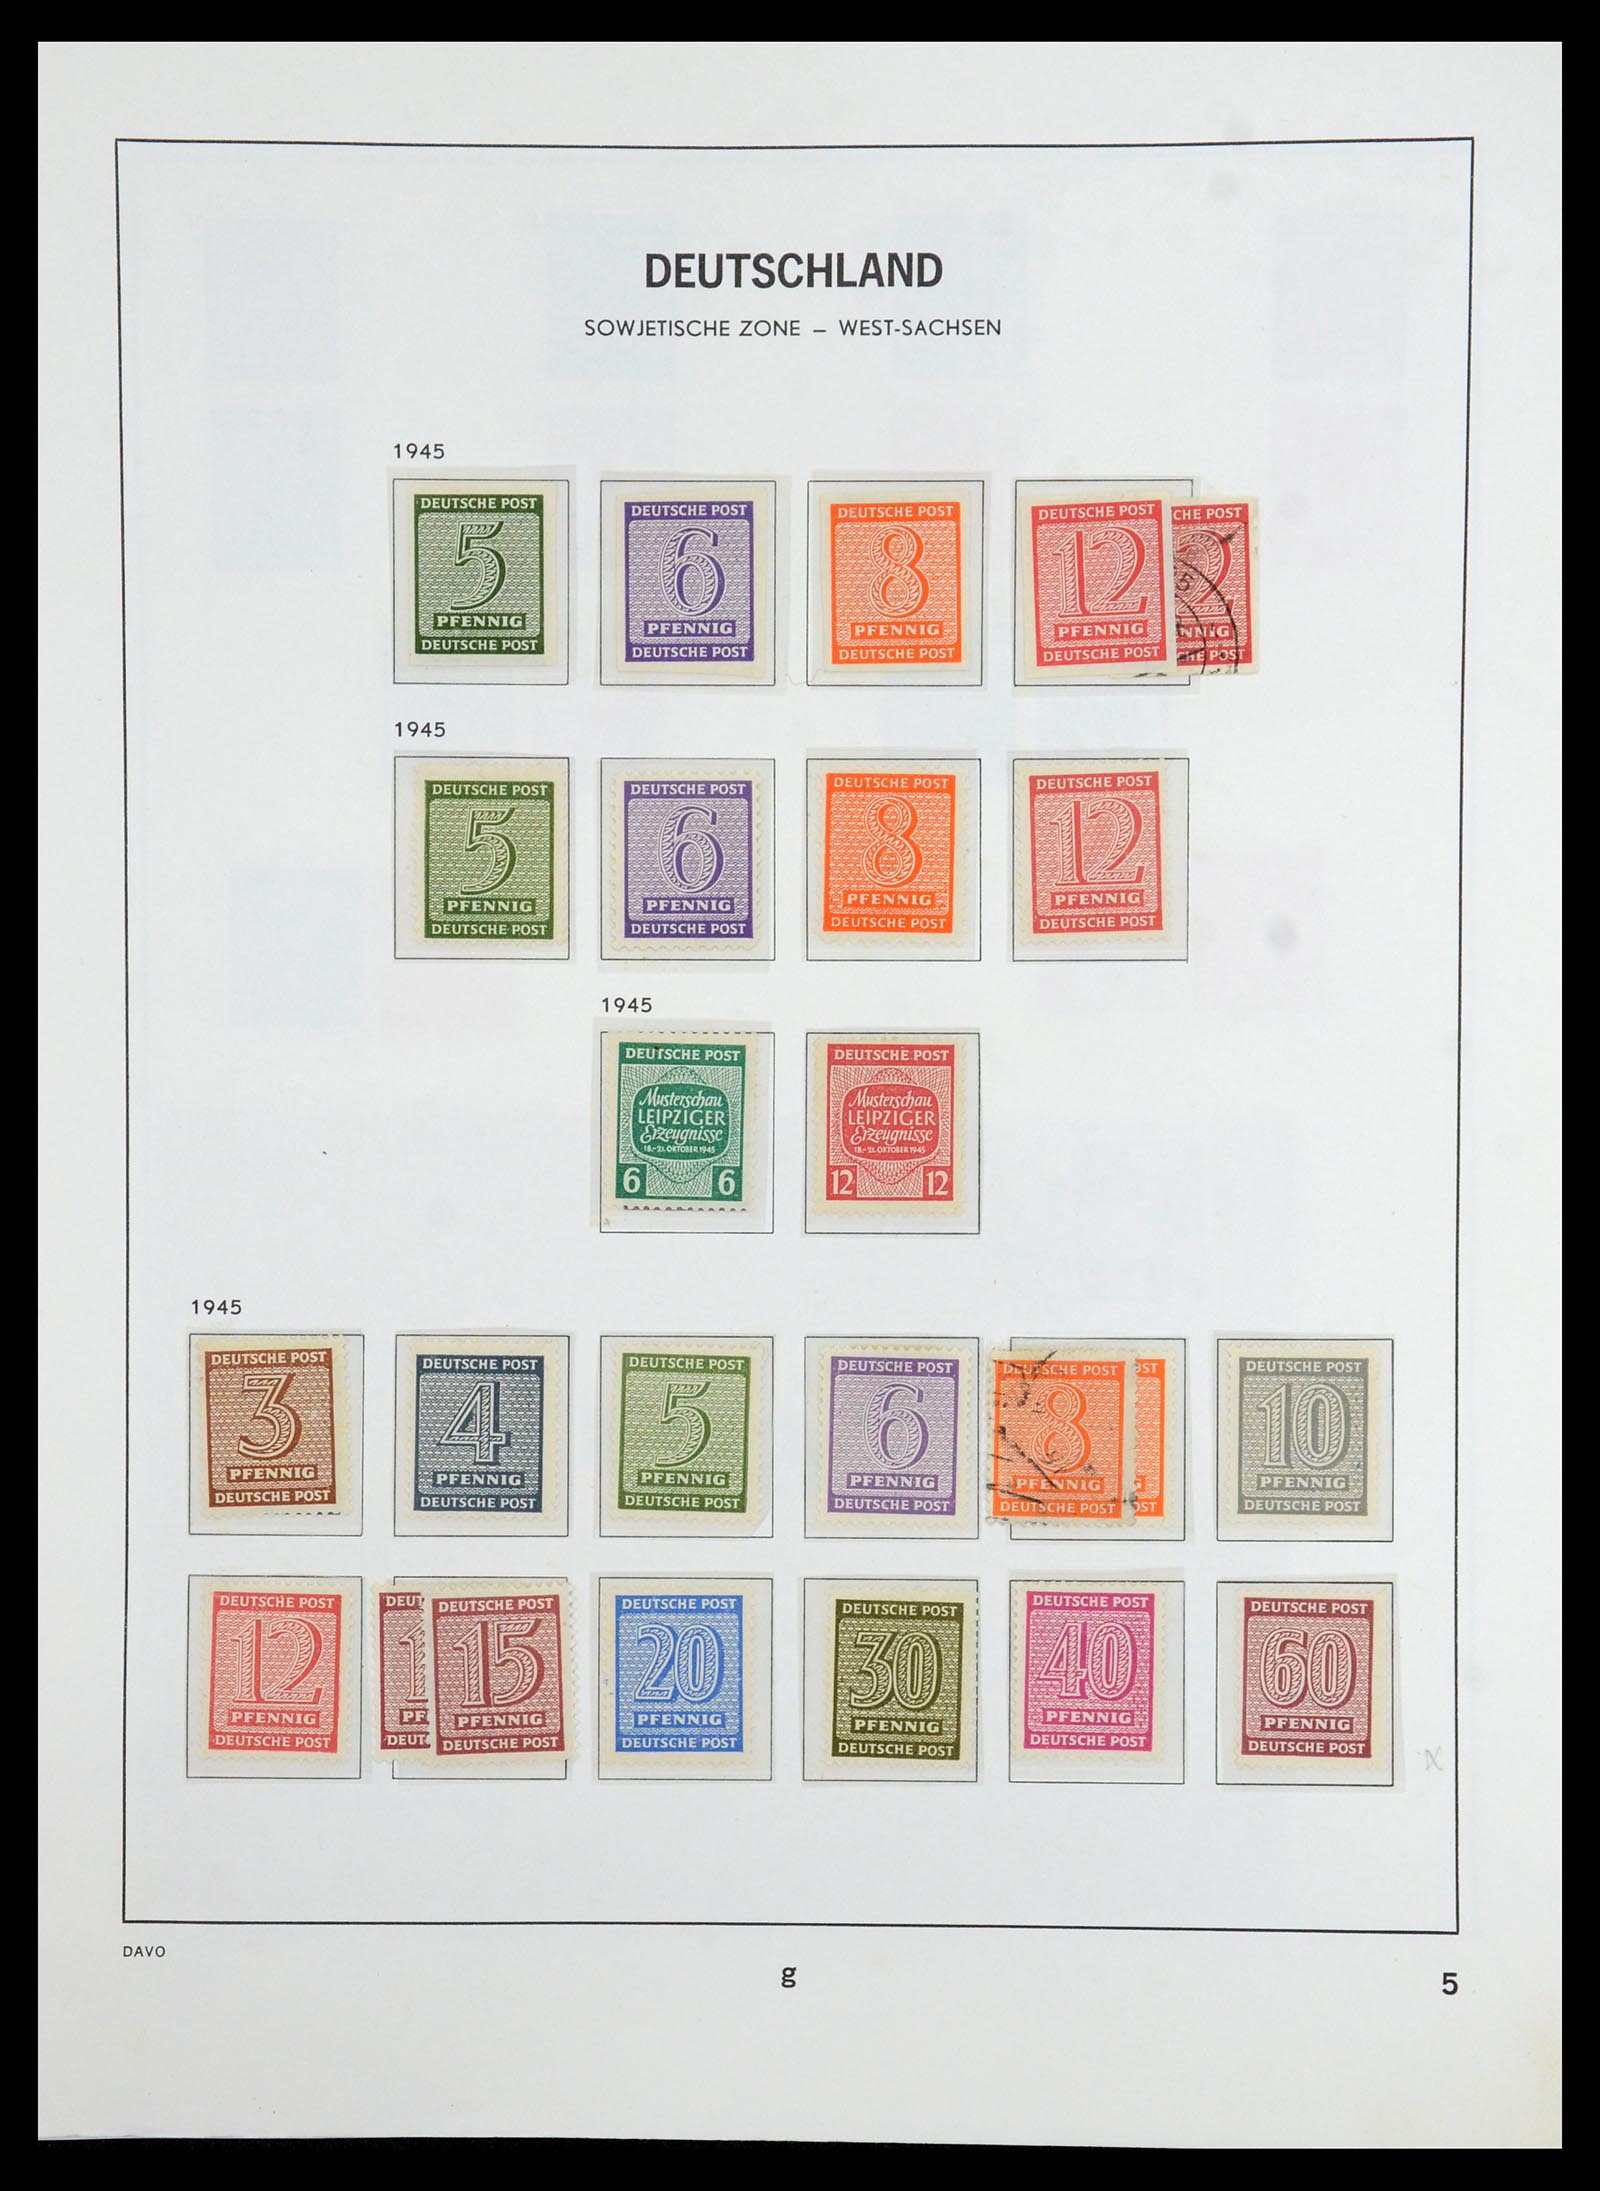 36421 031 - Stamp collection 36421 Soviet Zone 1945-1949.